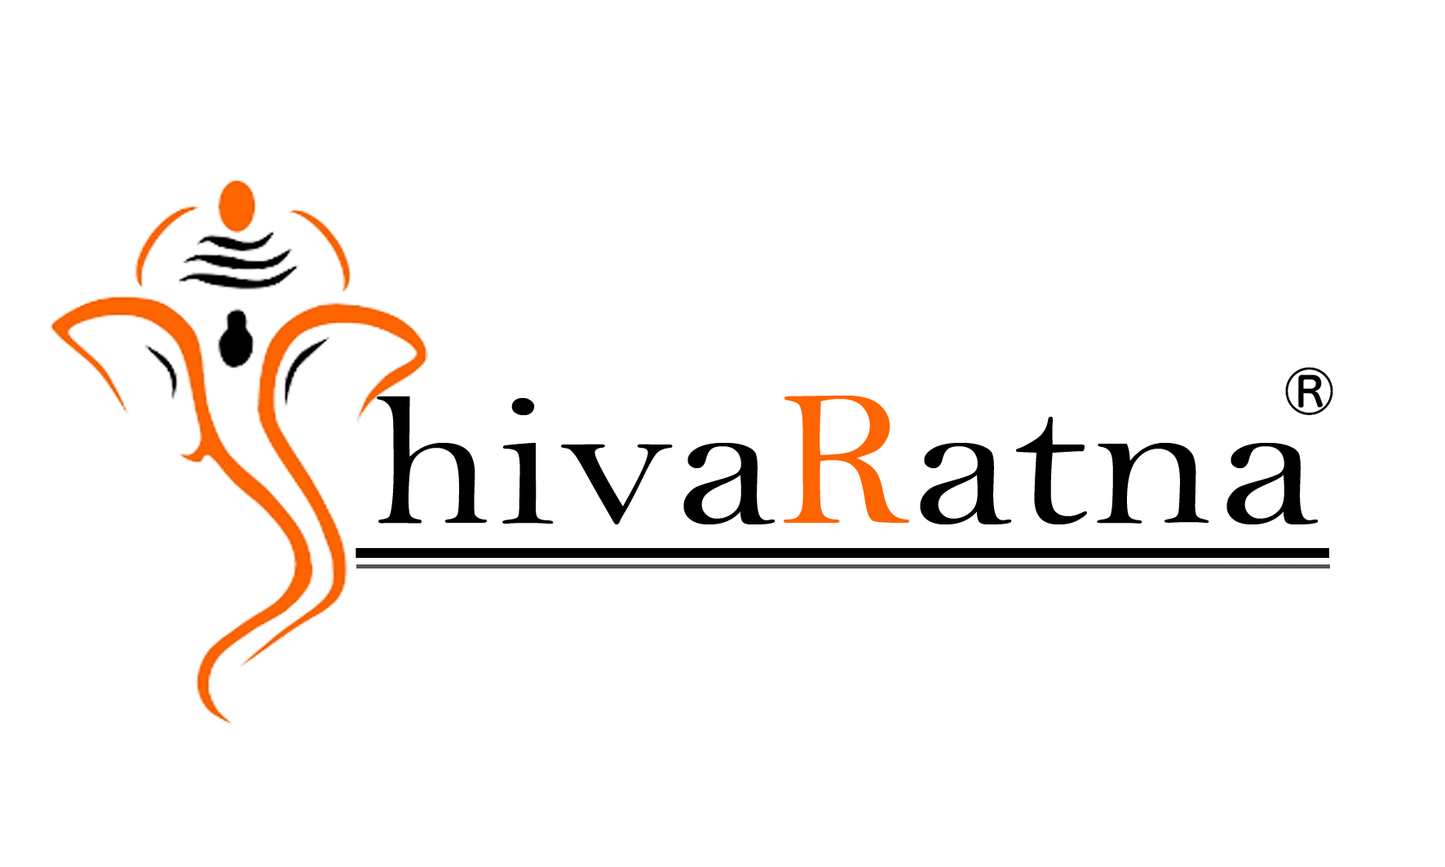 ShivaRatna srimad bhagwat mool paath parayanam - ShivaRatna